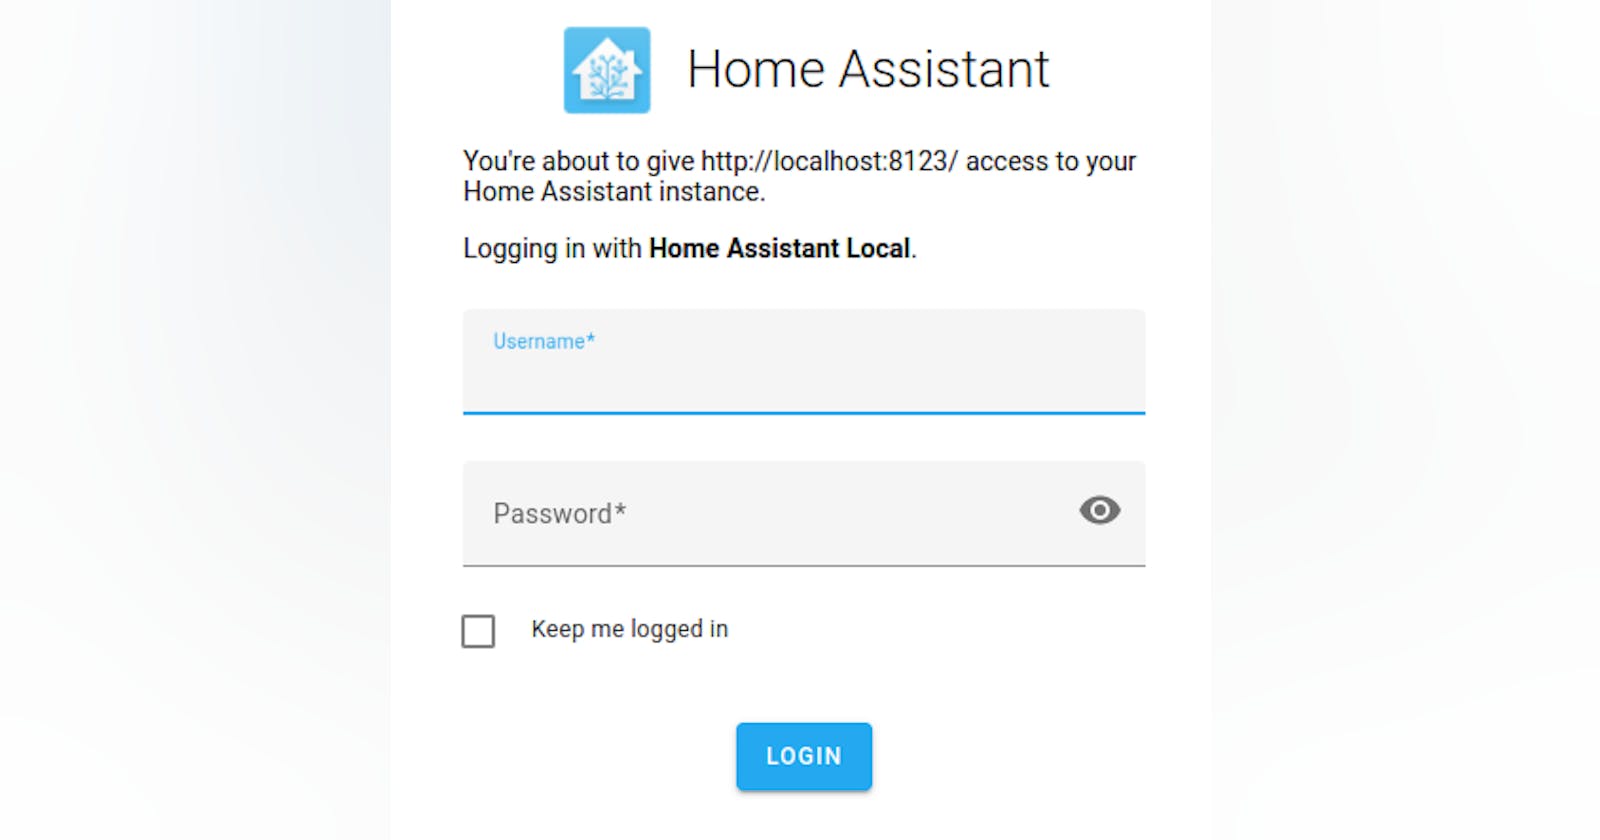 Write a custom component for Home Assistant